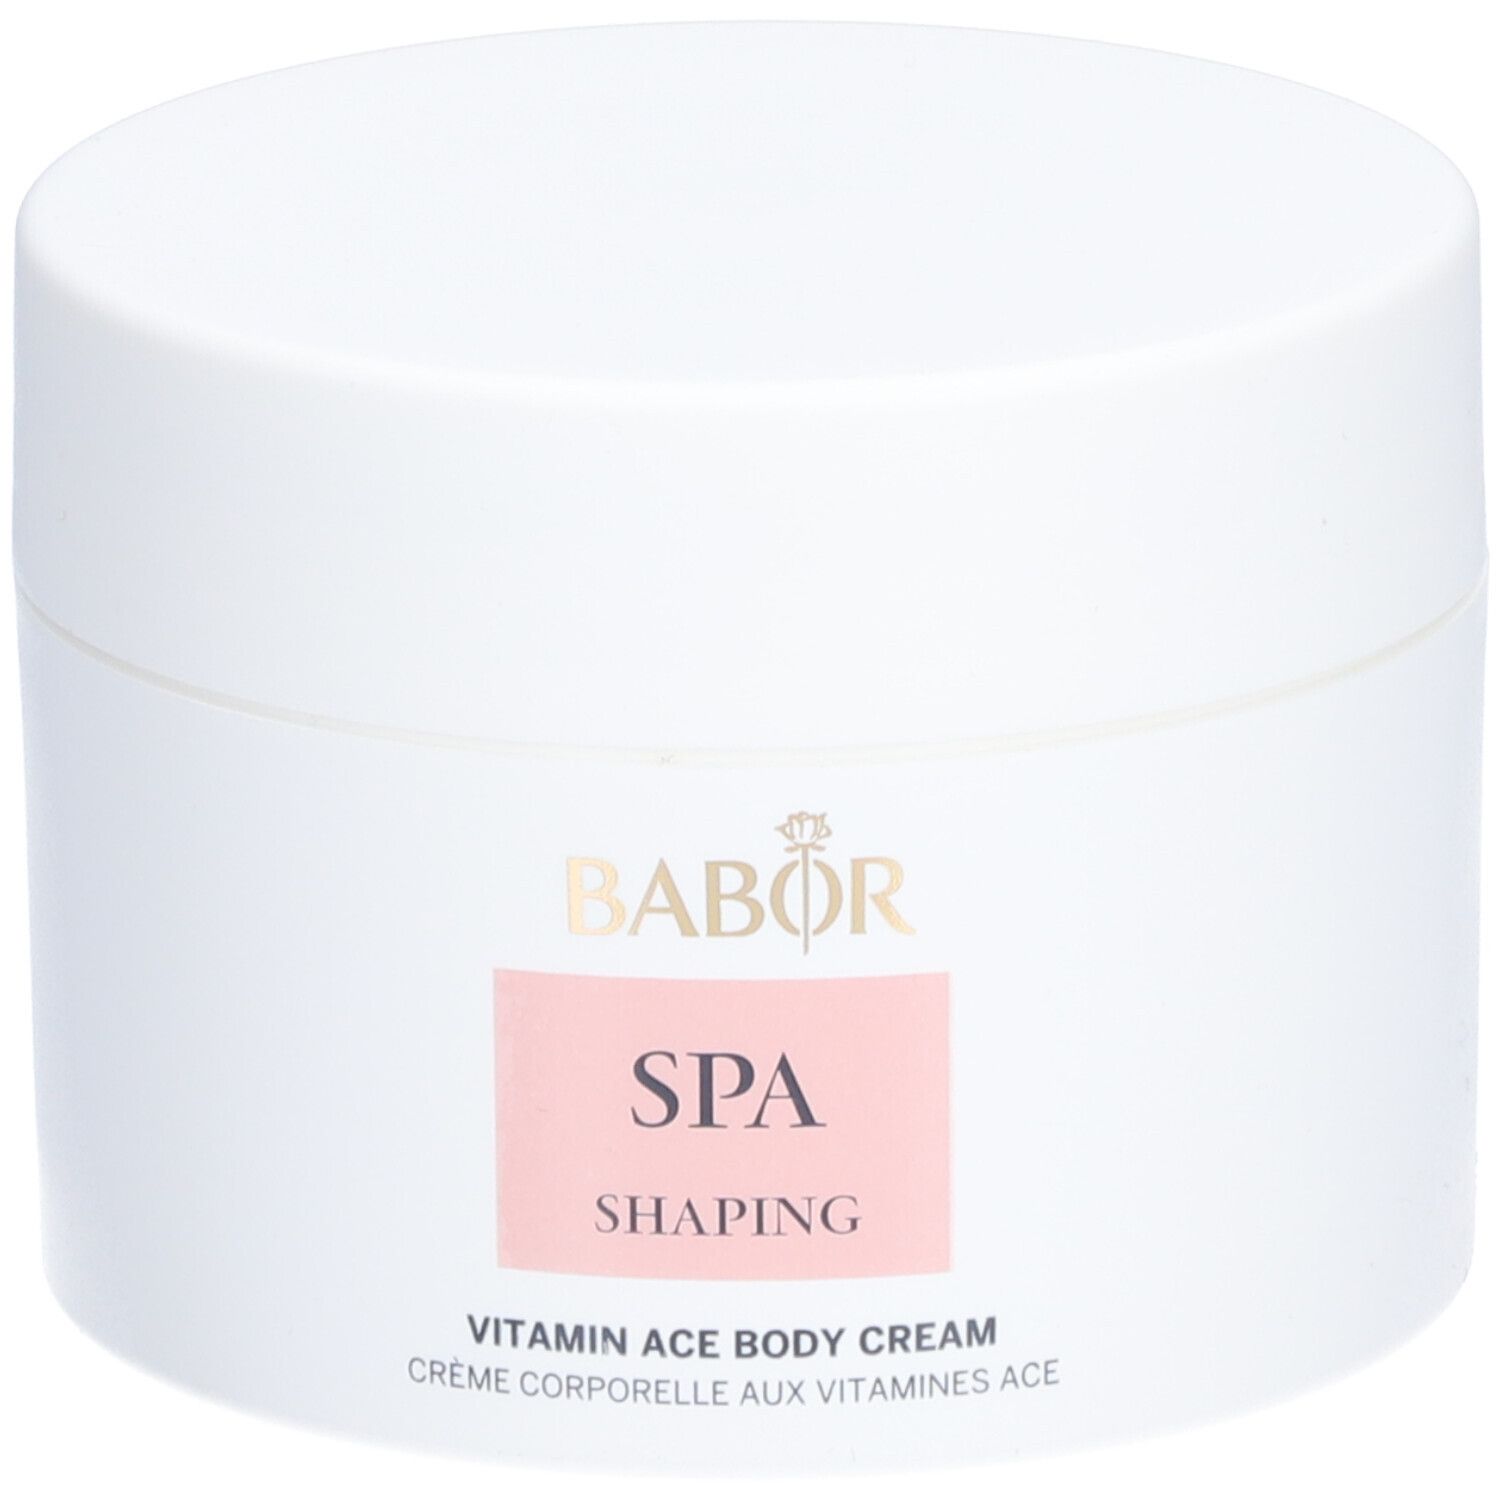 Babor SPA Shaping Vitamin ACE Body Cream